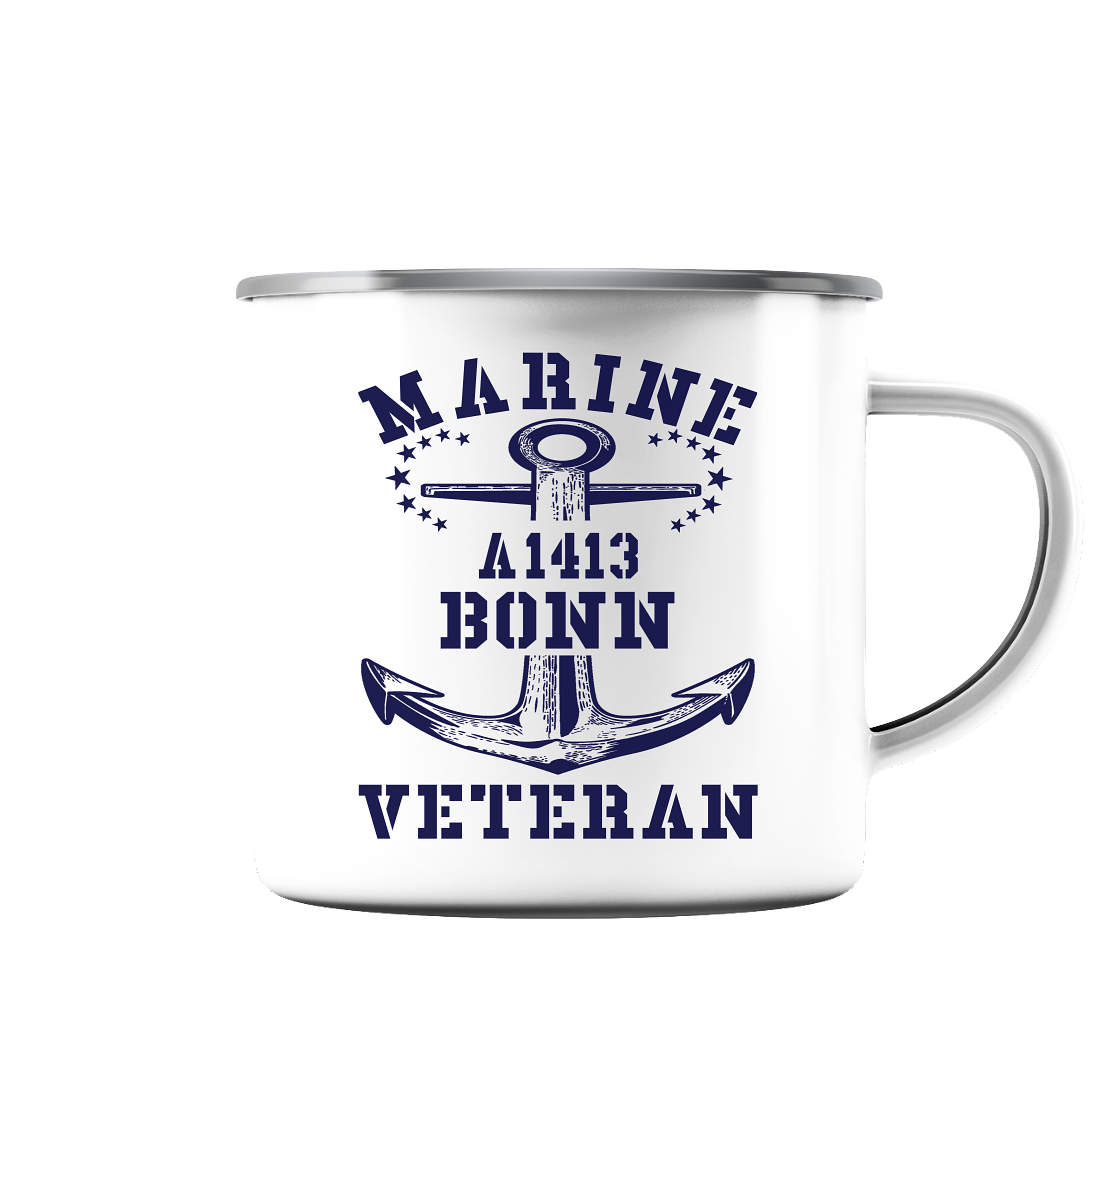 EGV A1413 BONN Marine Veteran - Emaille Tasse (Silber)